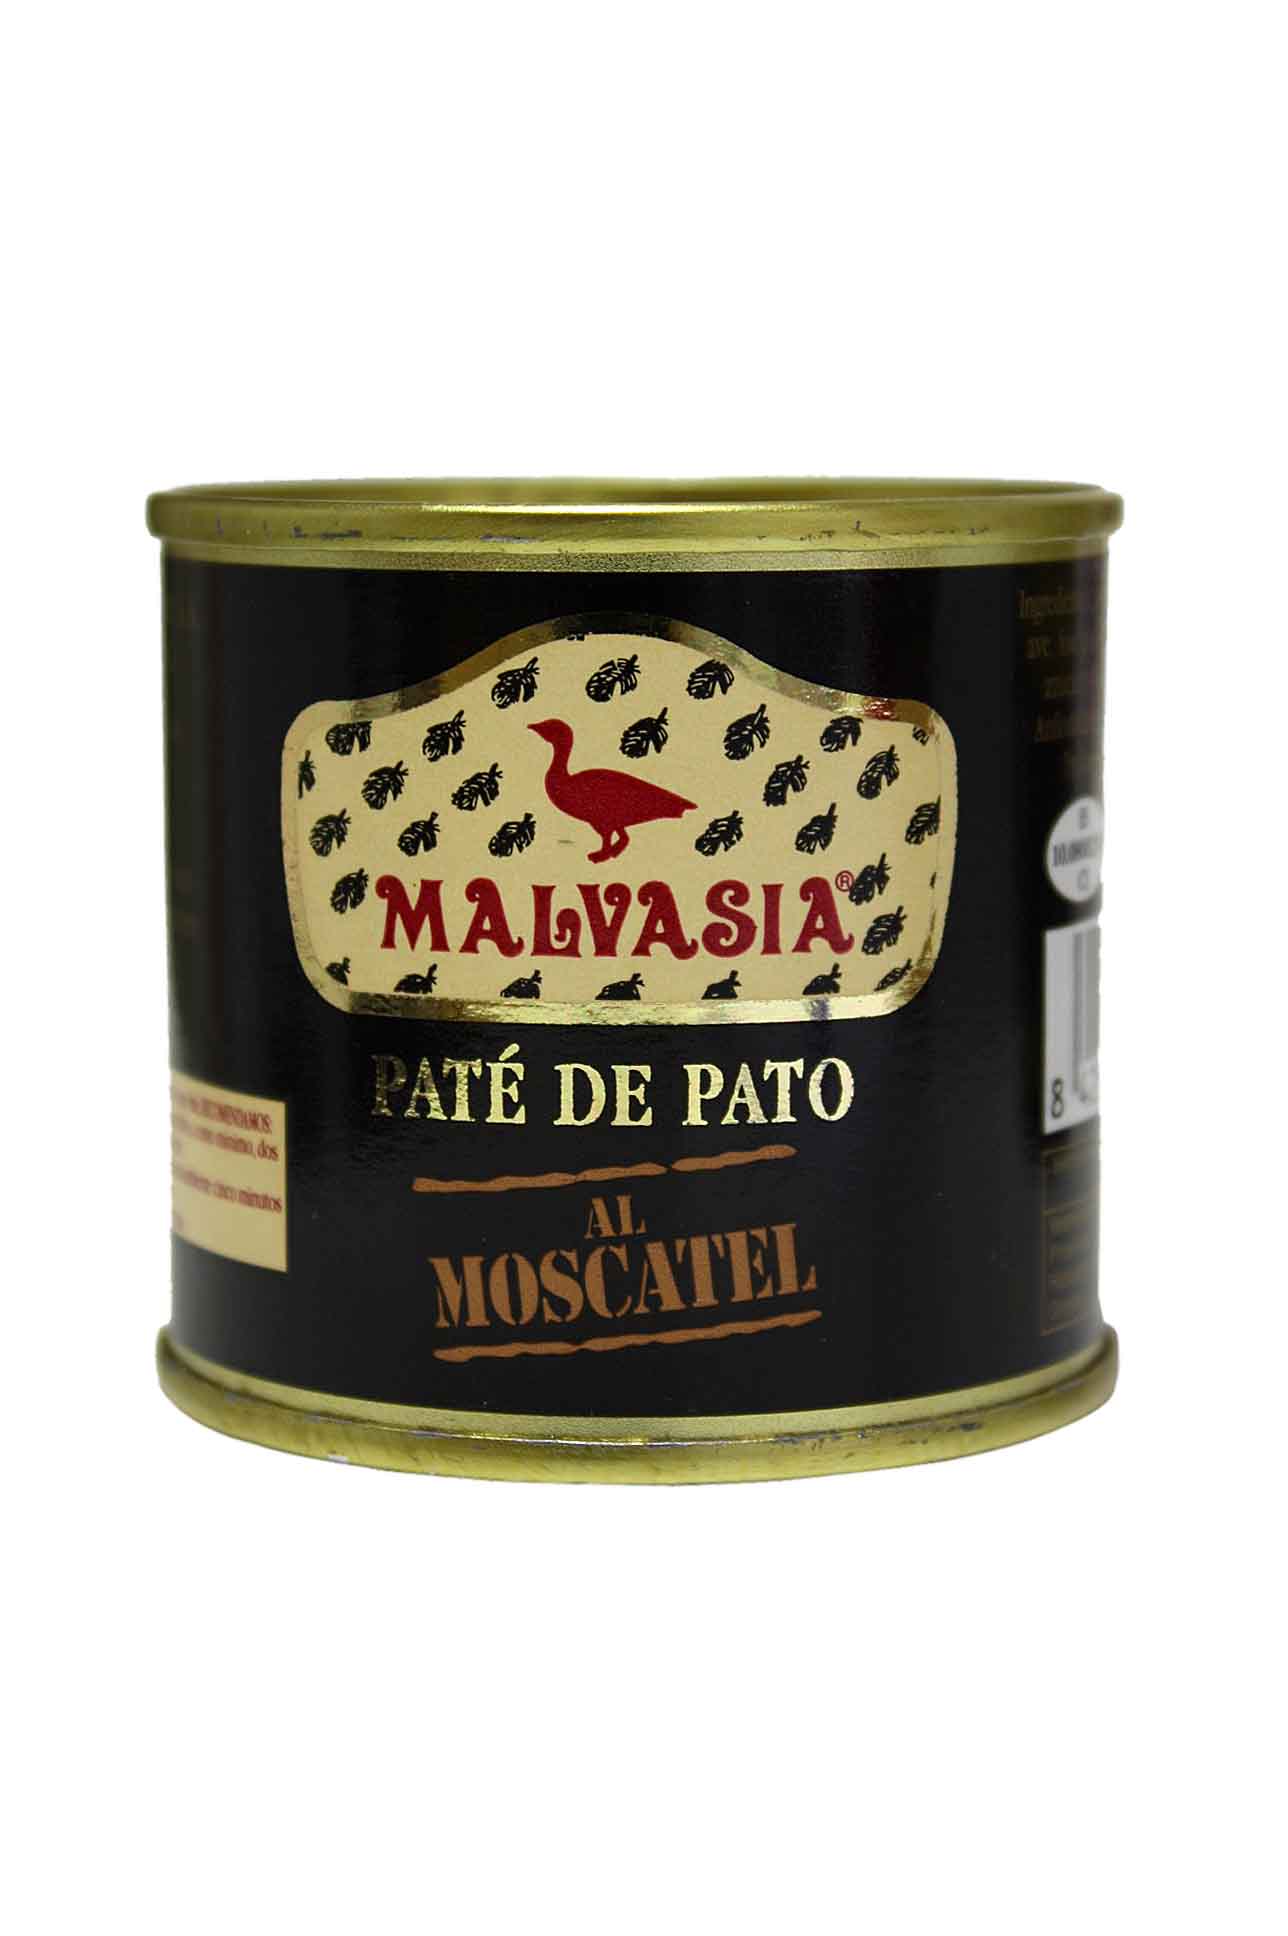 Malvasia PM20-Duck with muscatel wine pate